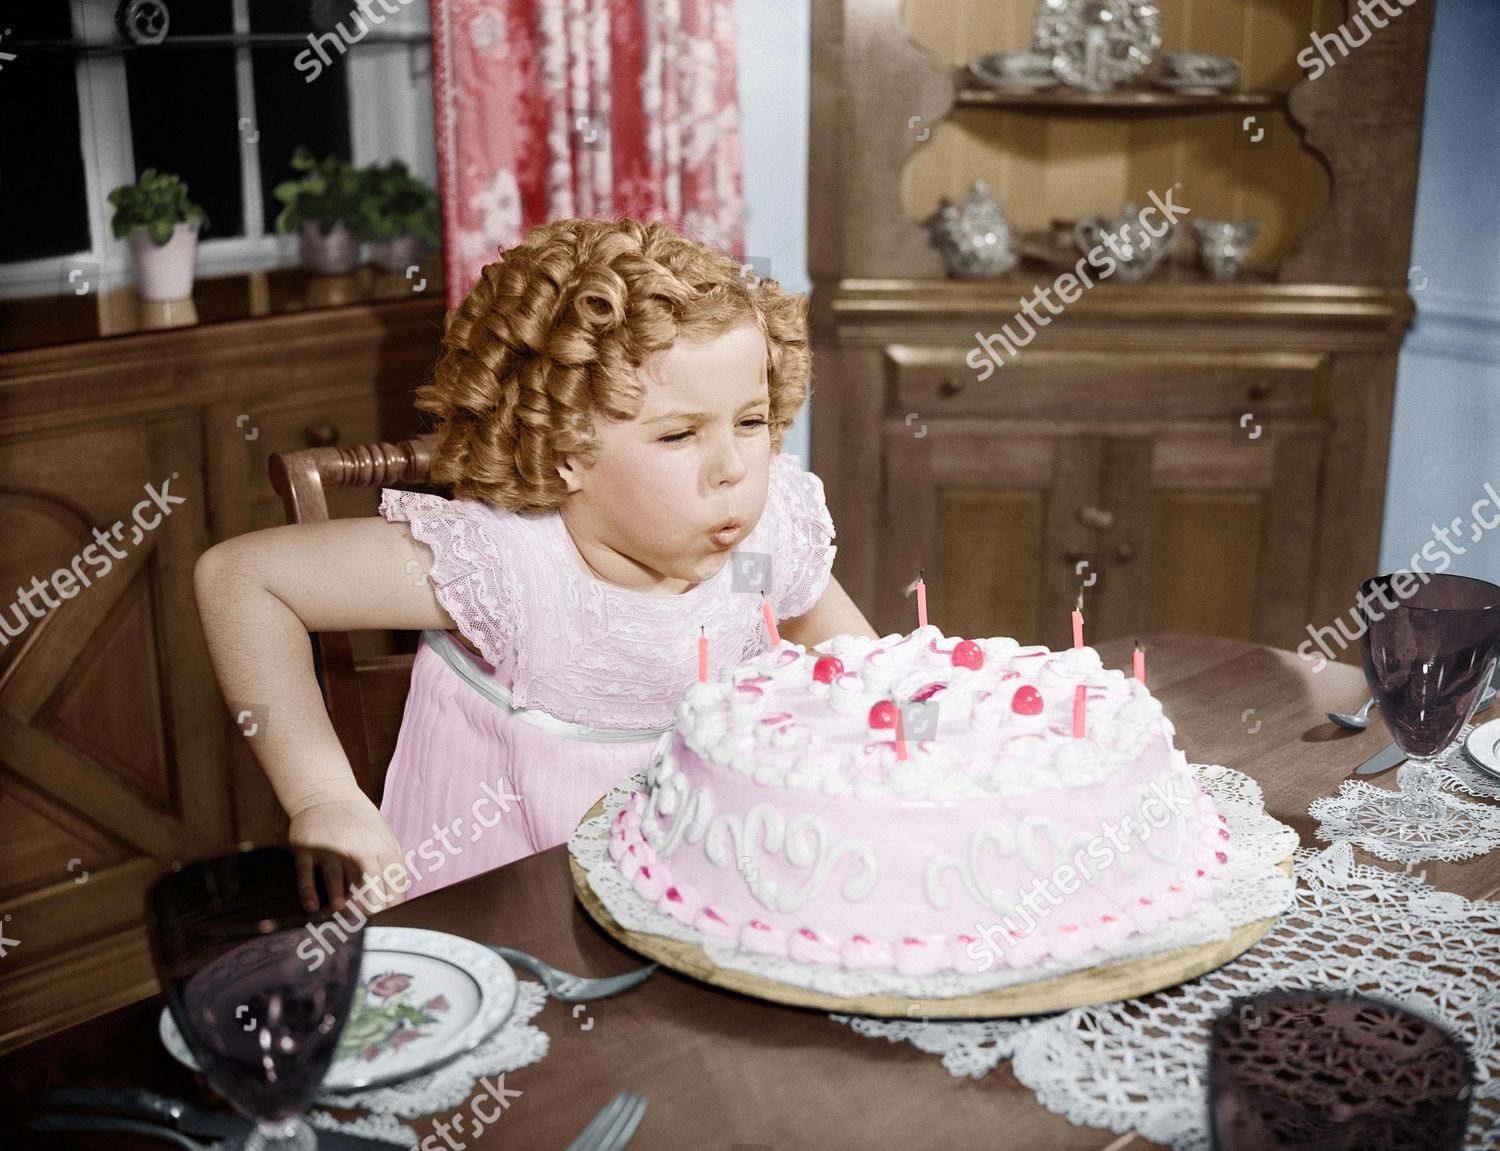 Shirley Temple cuts cake RARE phoro | eBay